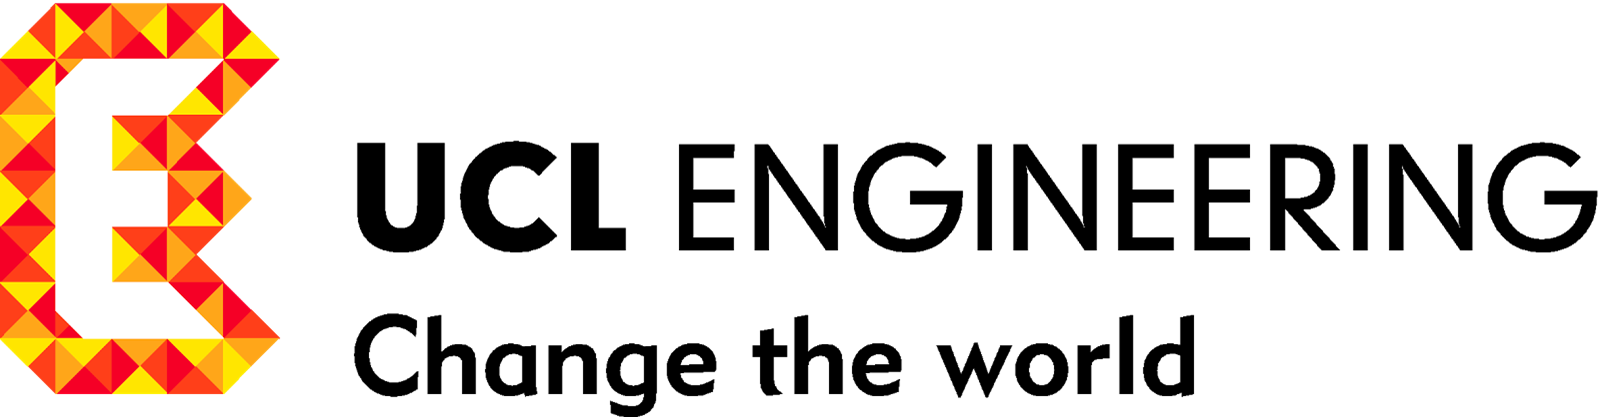 UCL Eng logo.png